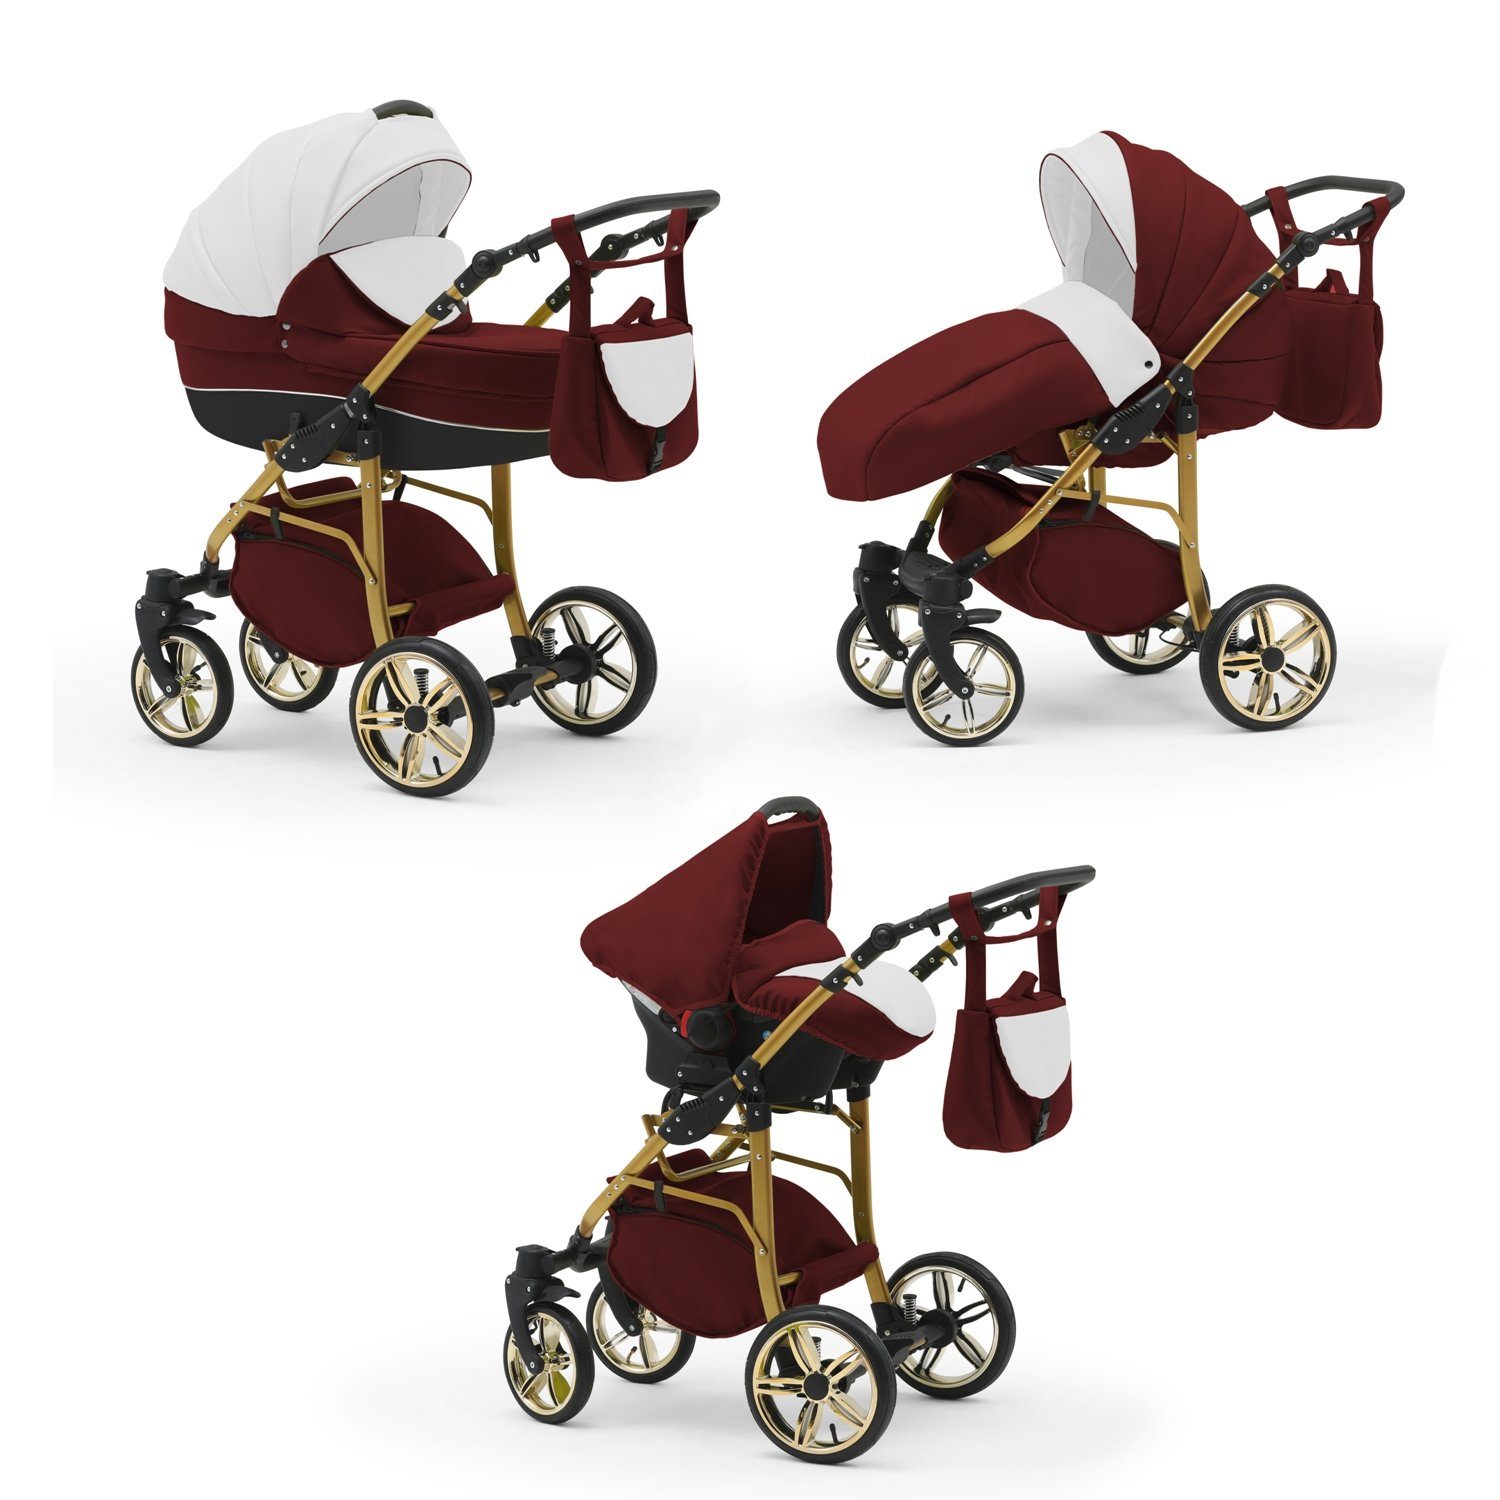 16 Cosmo in Bordeaux-Weiß-Schwarz 3 Kombi-Kinderwagen in - 46 Farben Teile Gold- 1 babies-on-wheels Kinderwagen-Set